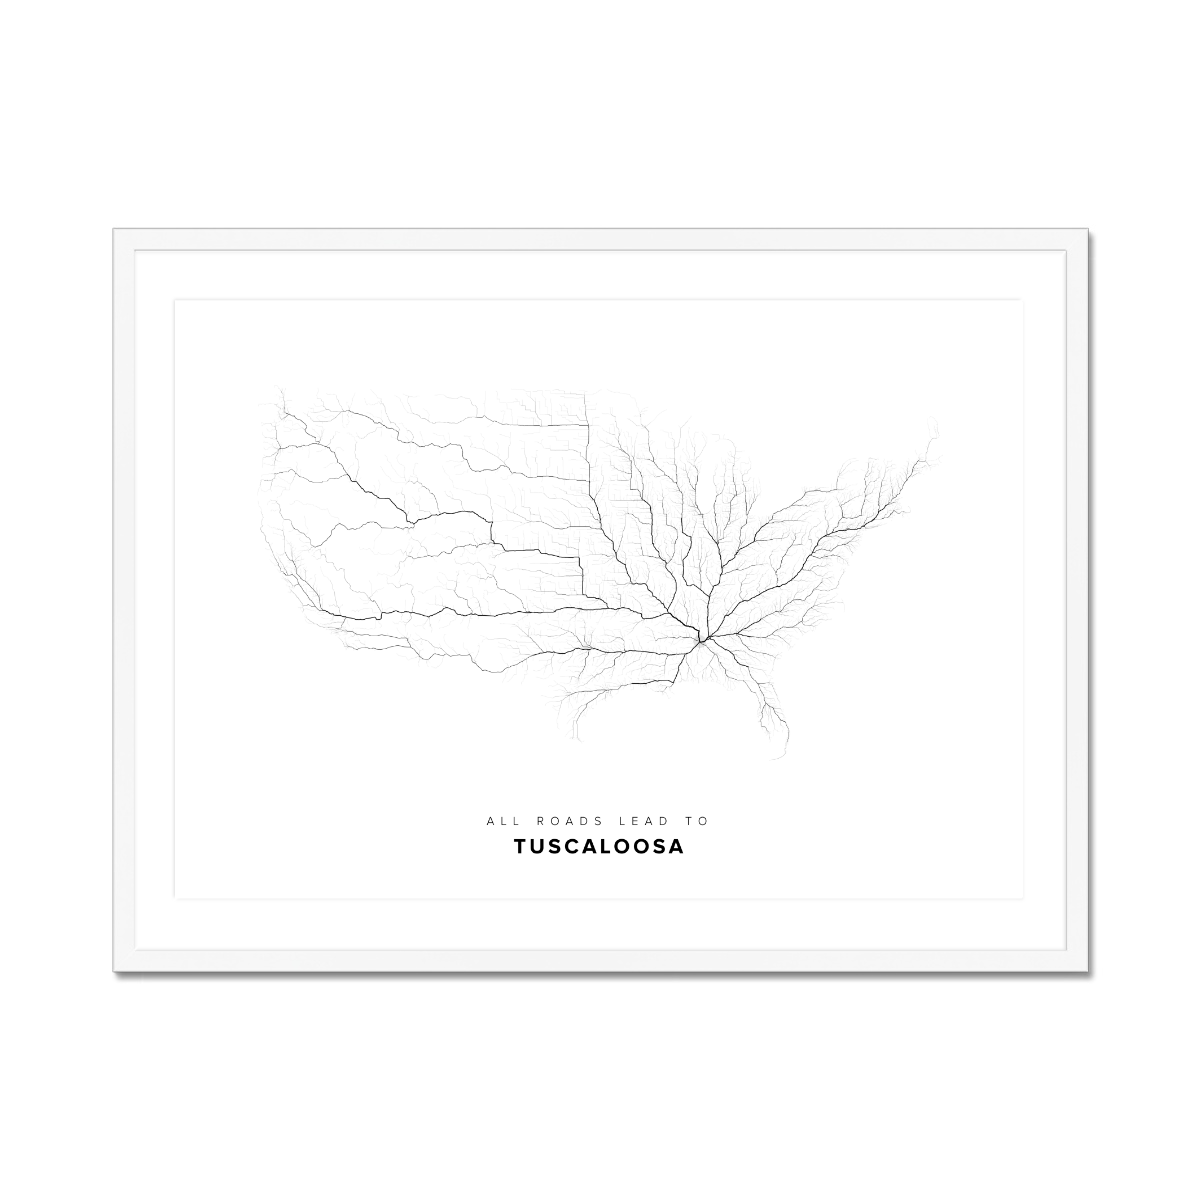 All roads lead to Tuscaloosa (United States of America) Fine Art Map Print